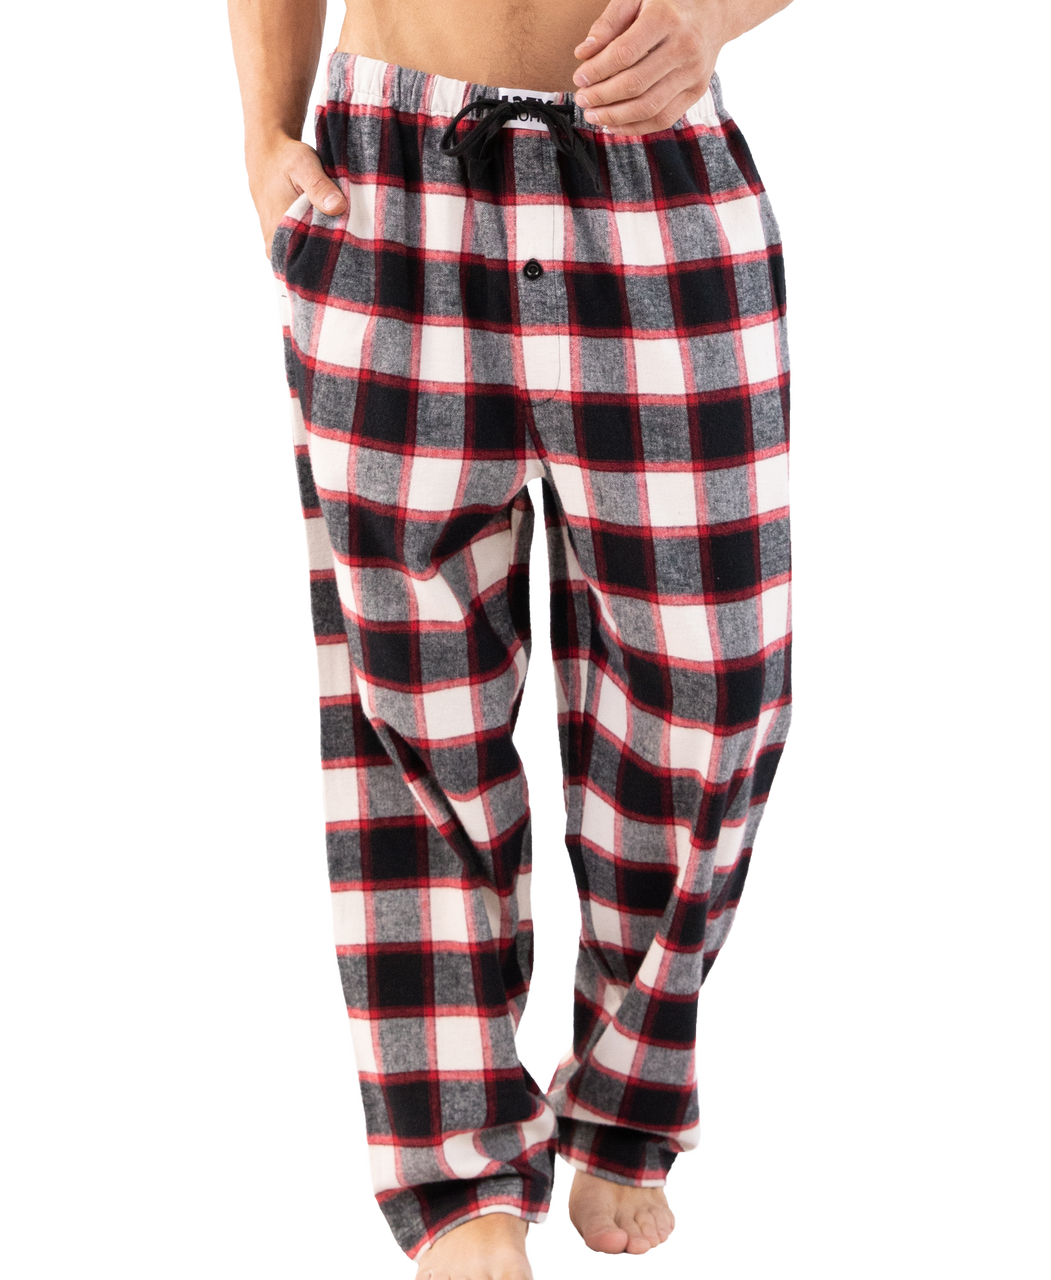 Relaxed Fit Pajama Pants - Black/white plaid - Men